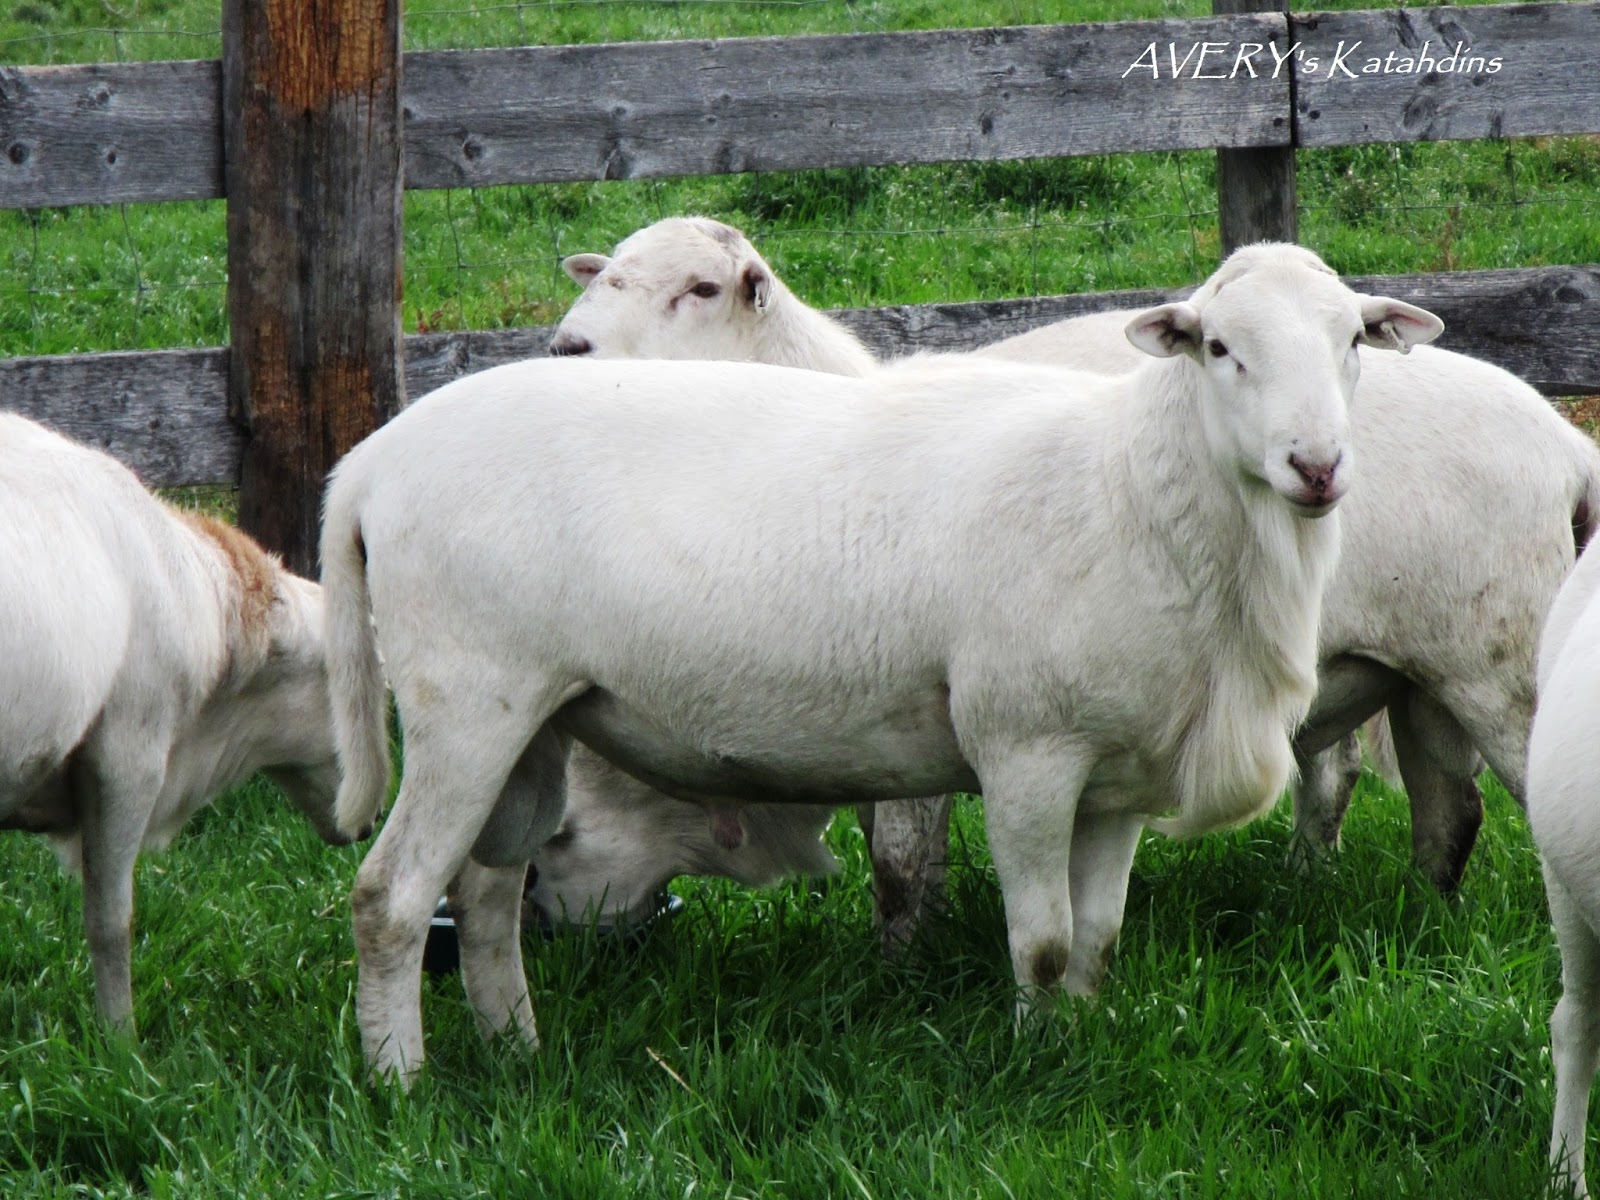 AVERYs KATAHDIN SHEEP 7 Outstanding Yearling Ram Lambs For Sale